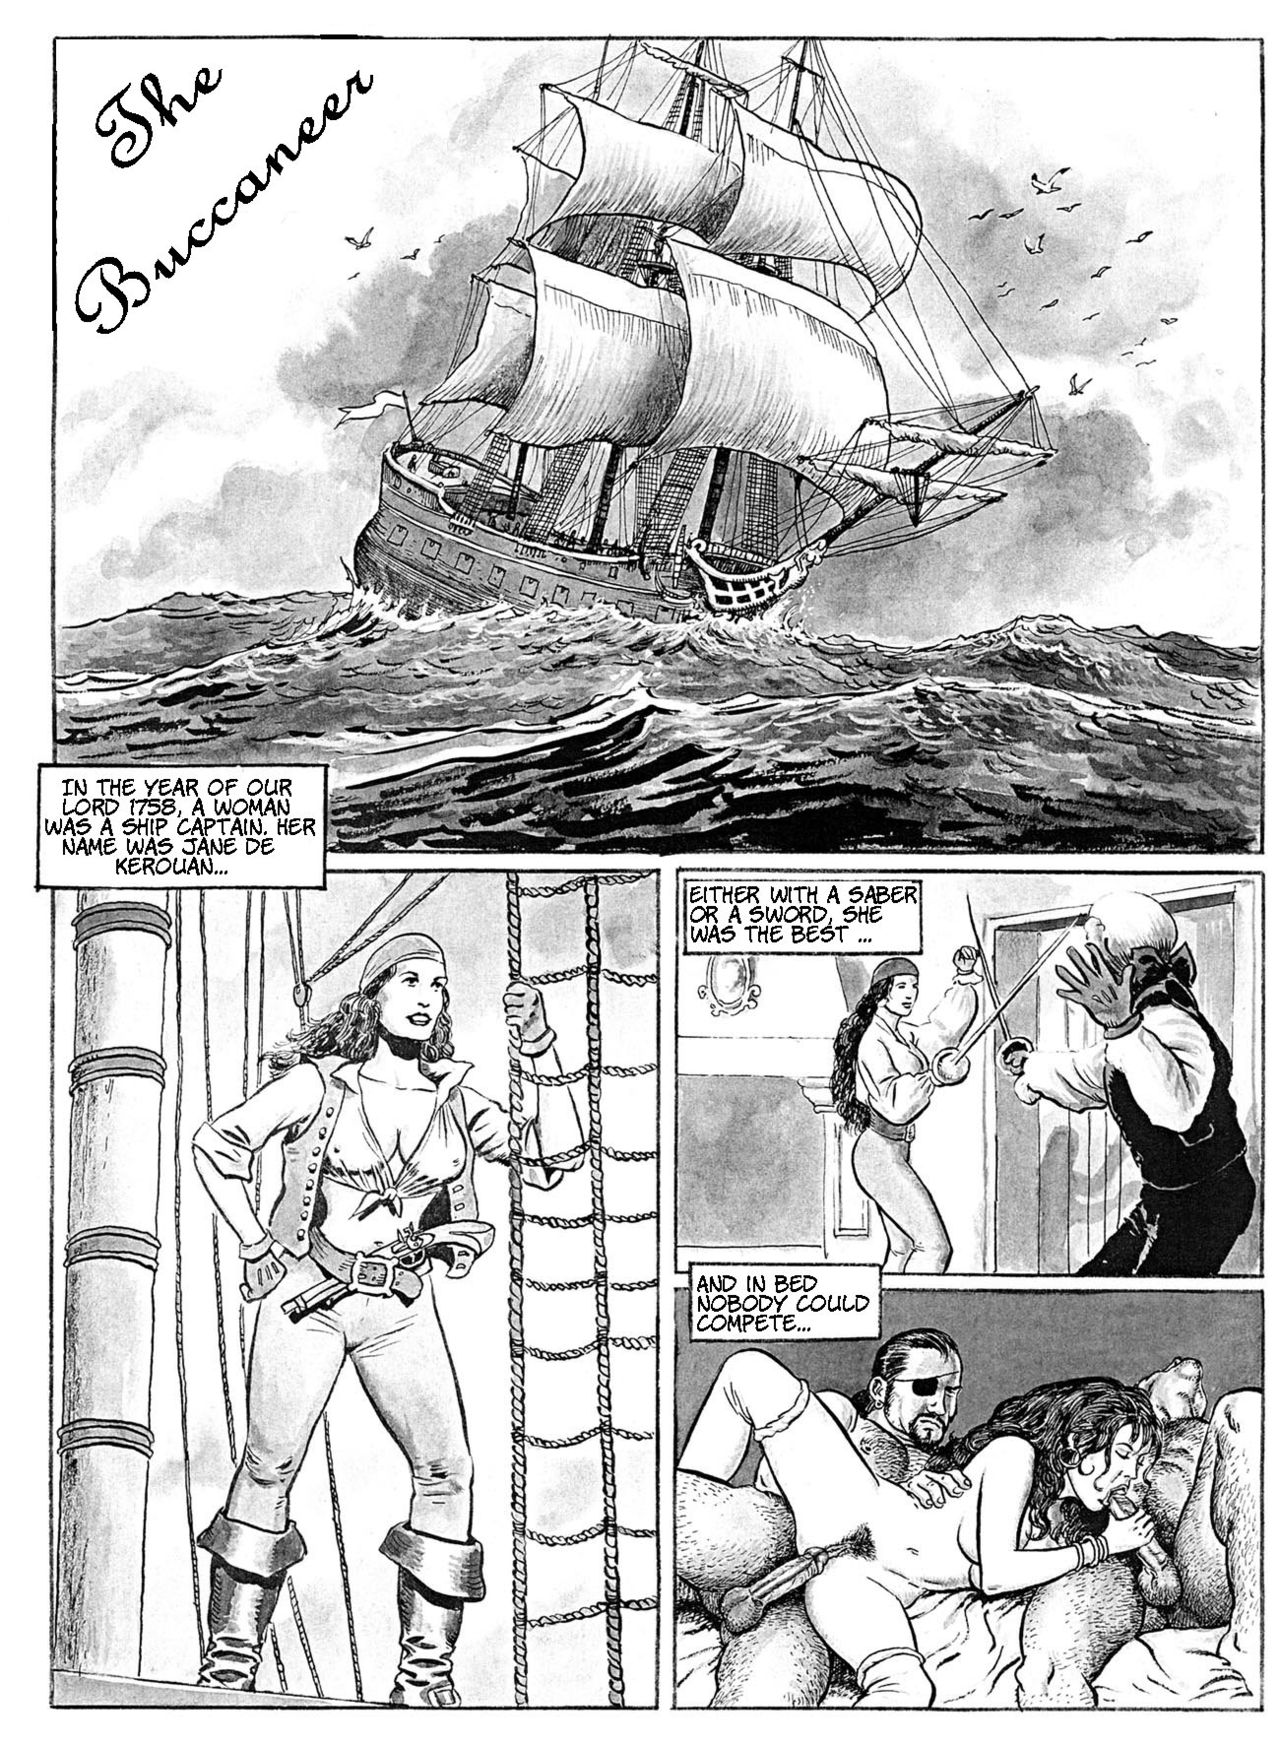 Порно комиксы с пиратами фото 66